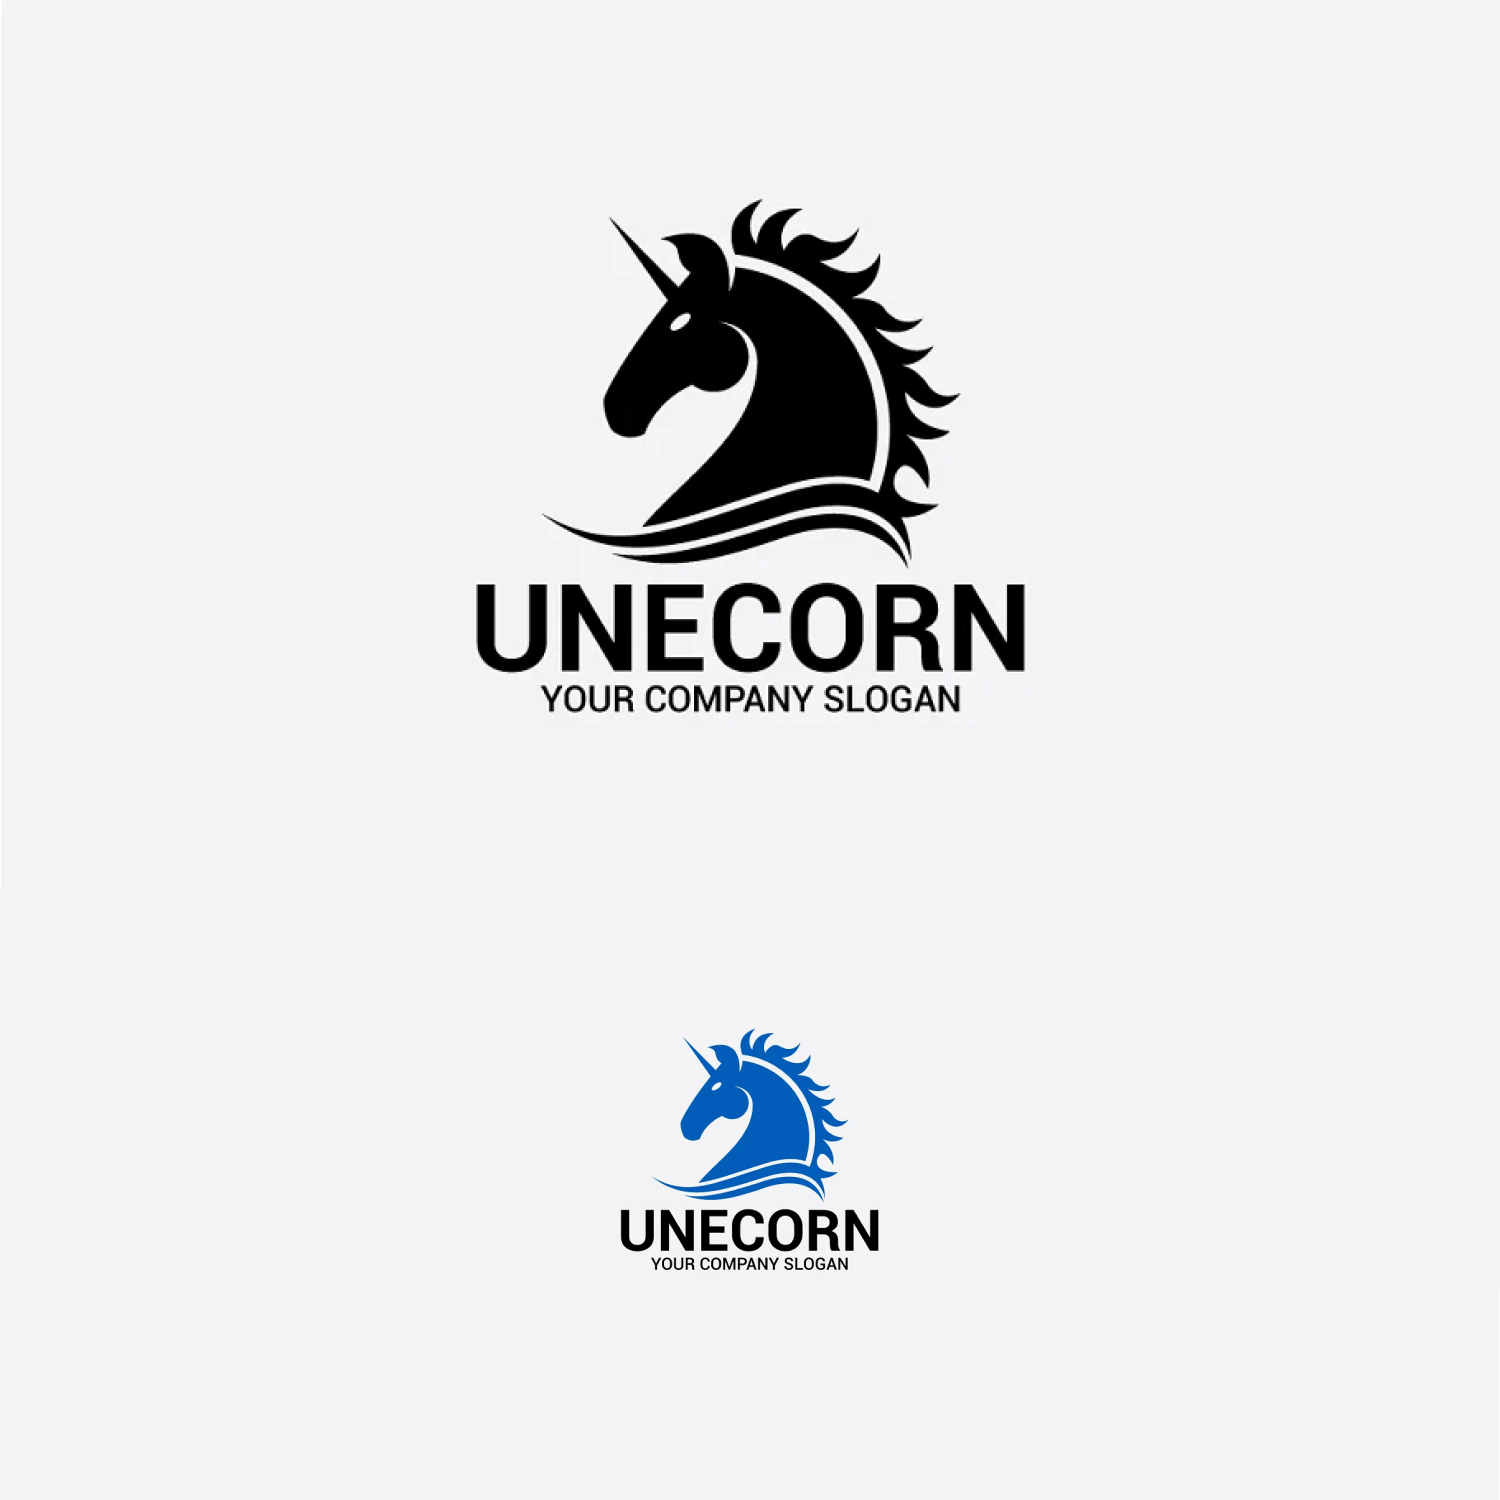 Modern Unecorn logo.